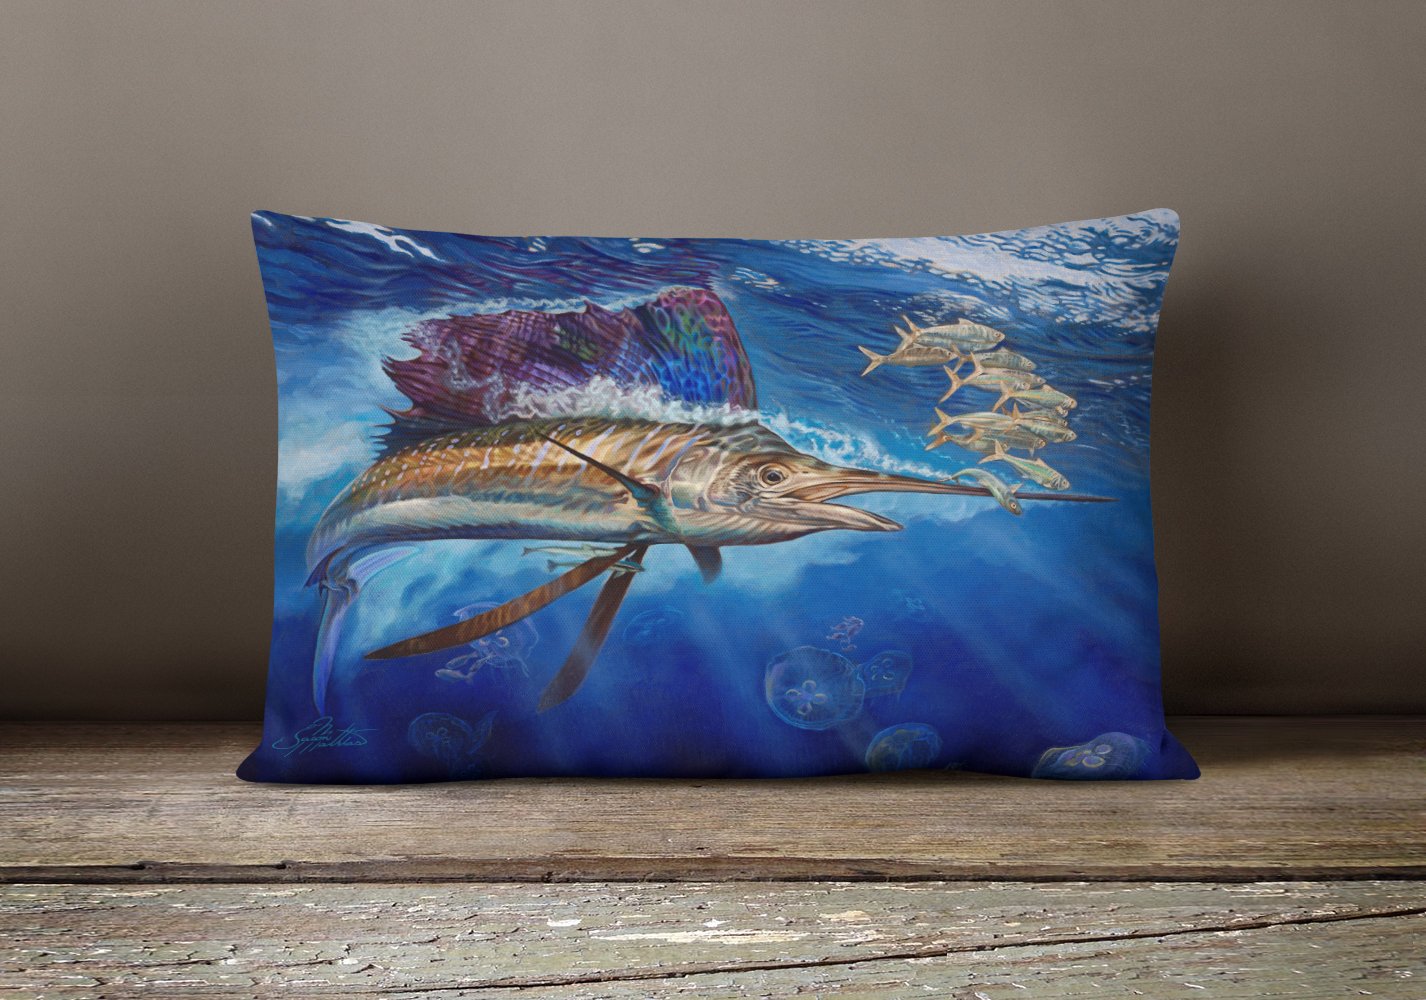 Majesty Sailfish Canvas Fabric Decorative Pillow JMA2010PW1216 by Caroline's Treasures